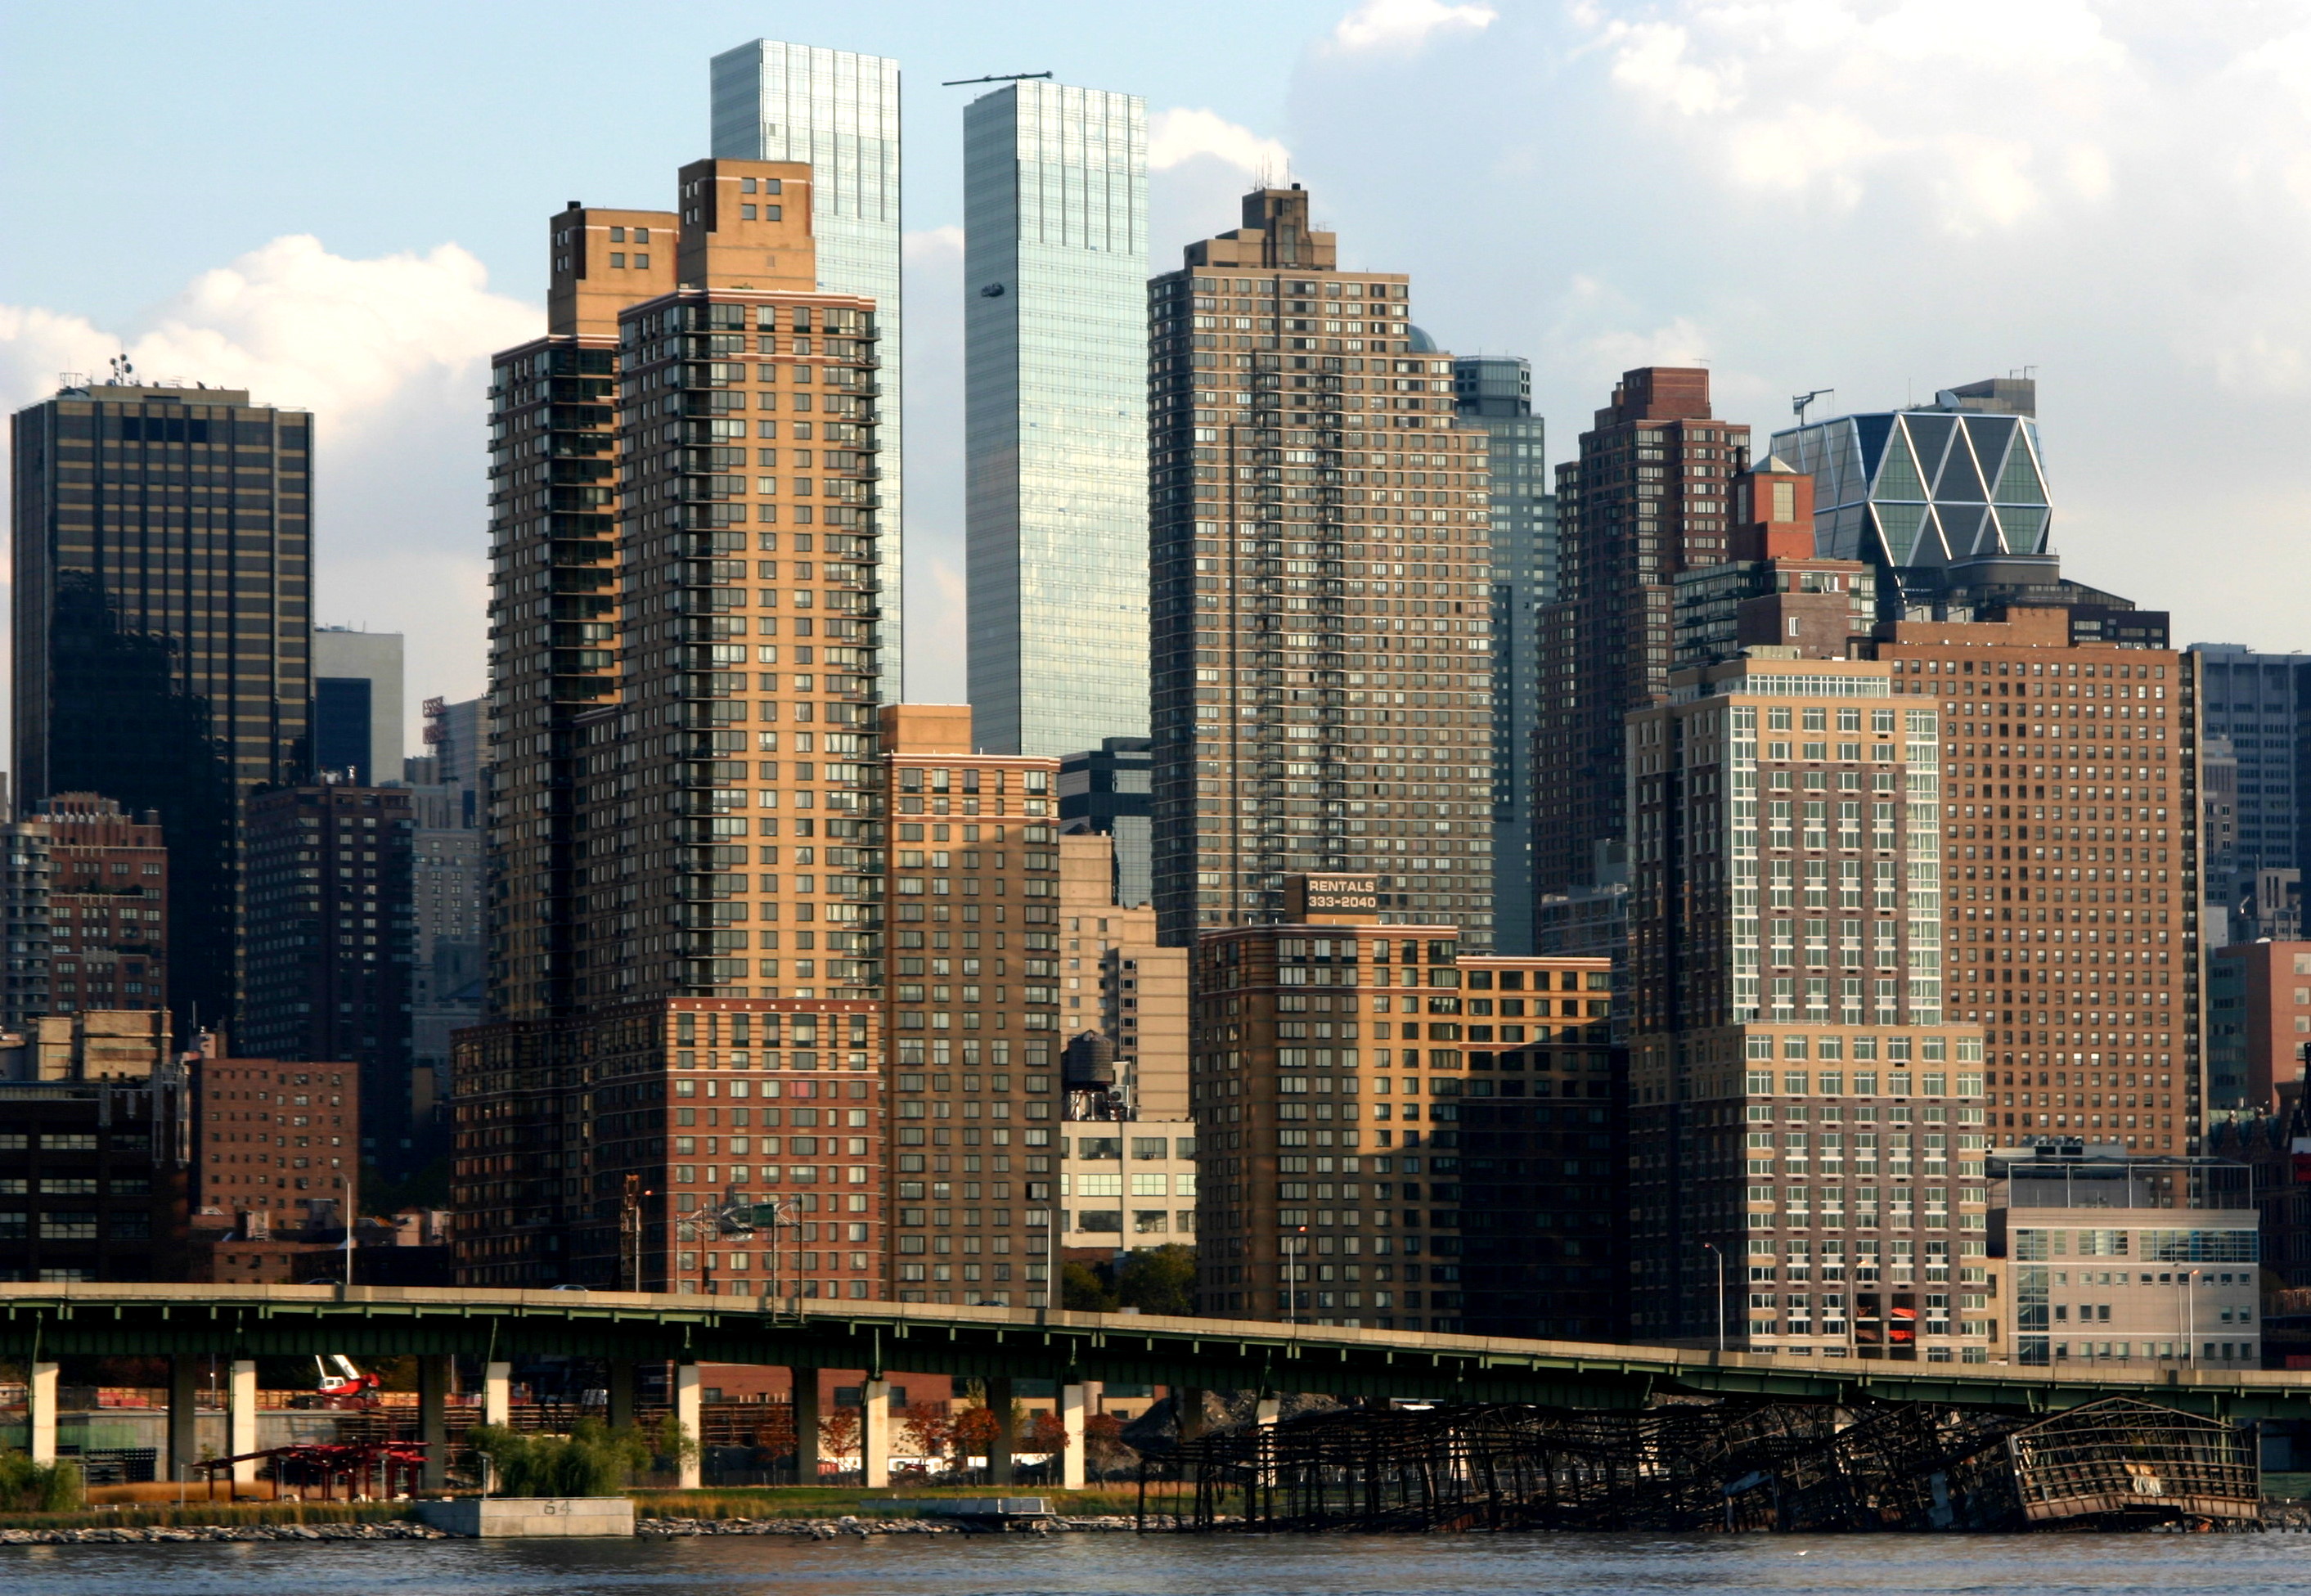 File:New York City building.jpg - Wikimedia Commons